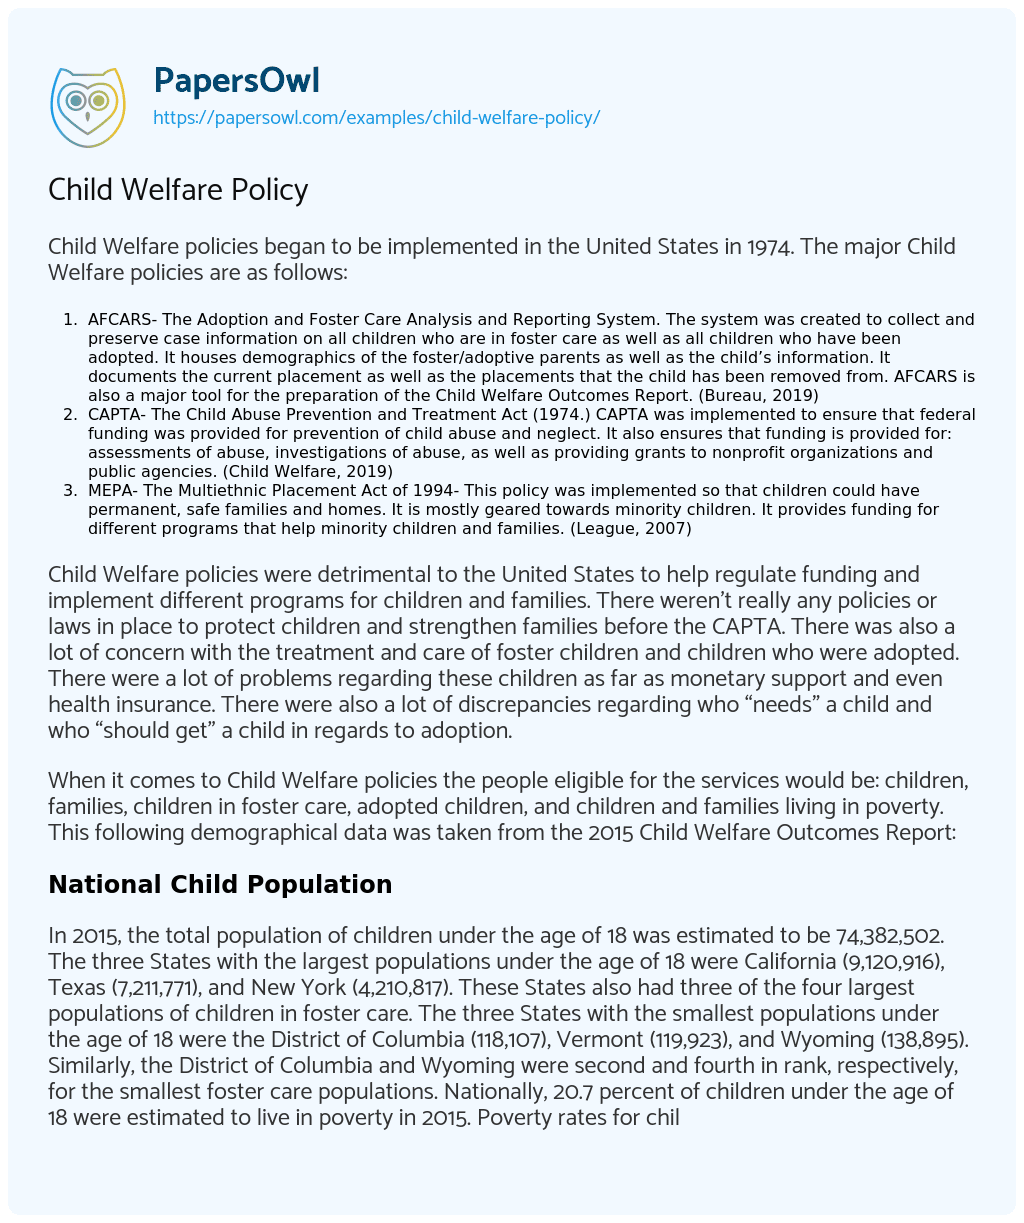 Essay on Child Welfare Policy